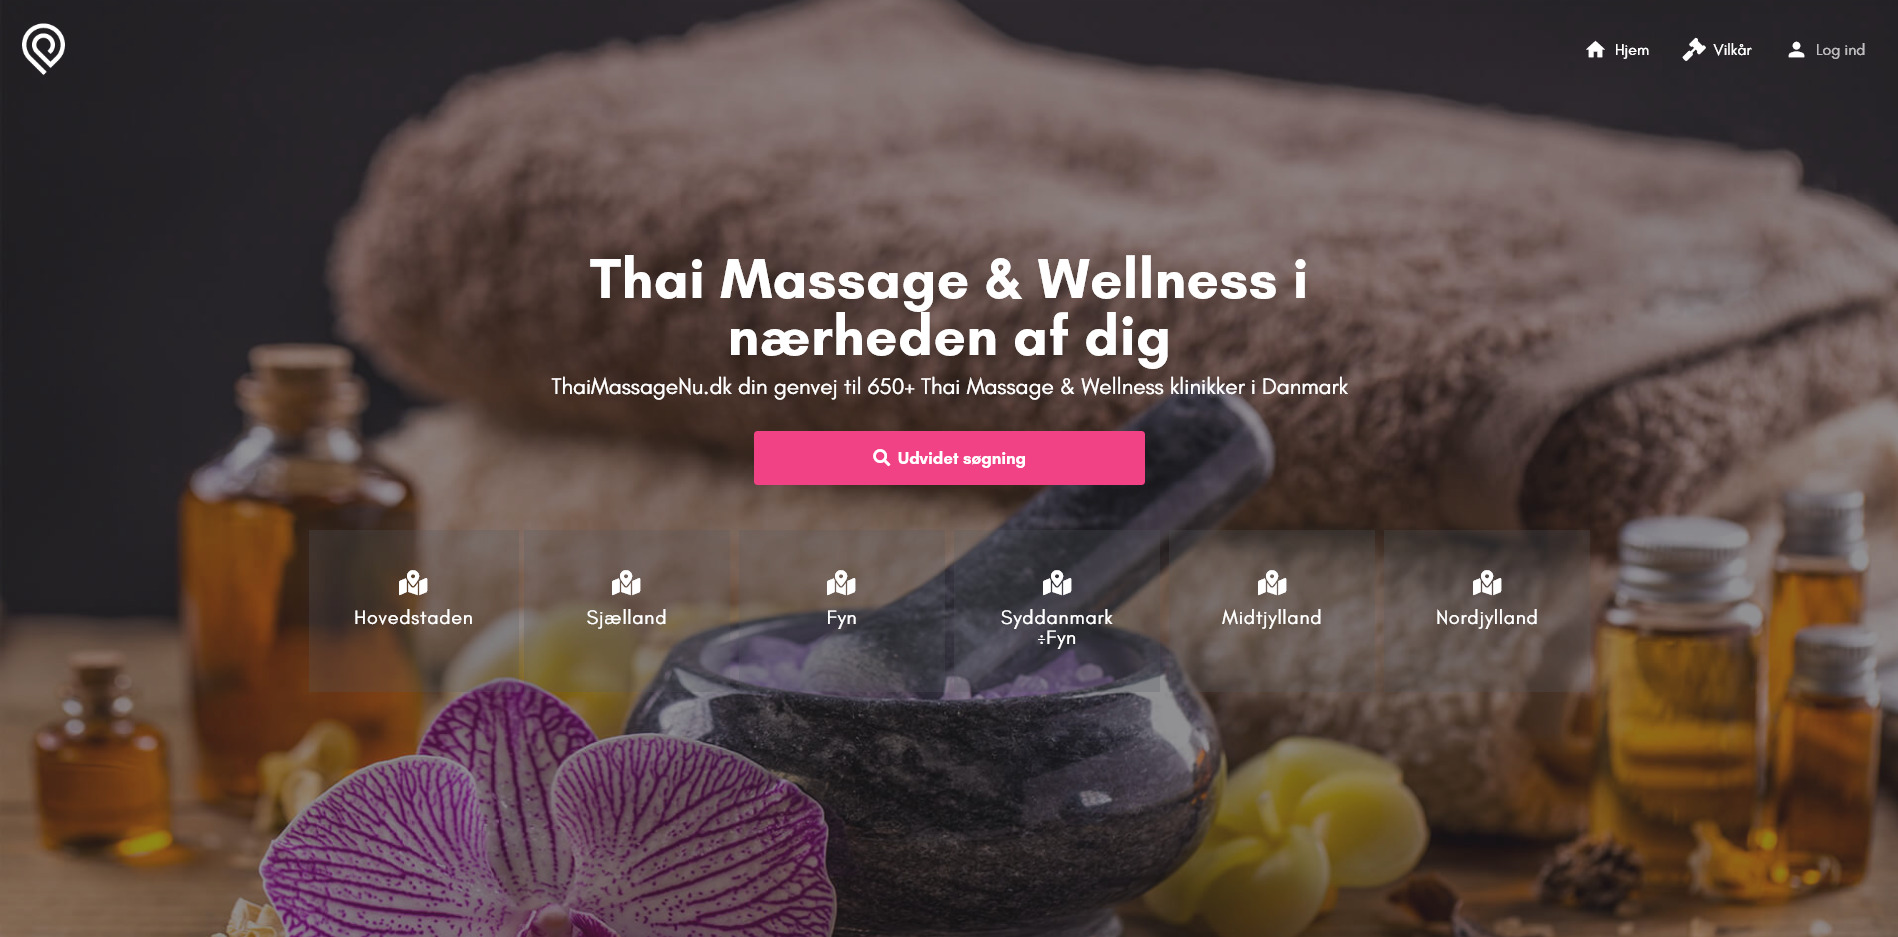 Thai Massage & Wellness Guide | 633 Klinikker | ThaiMassageNu.dk